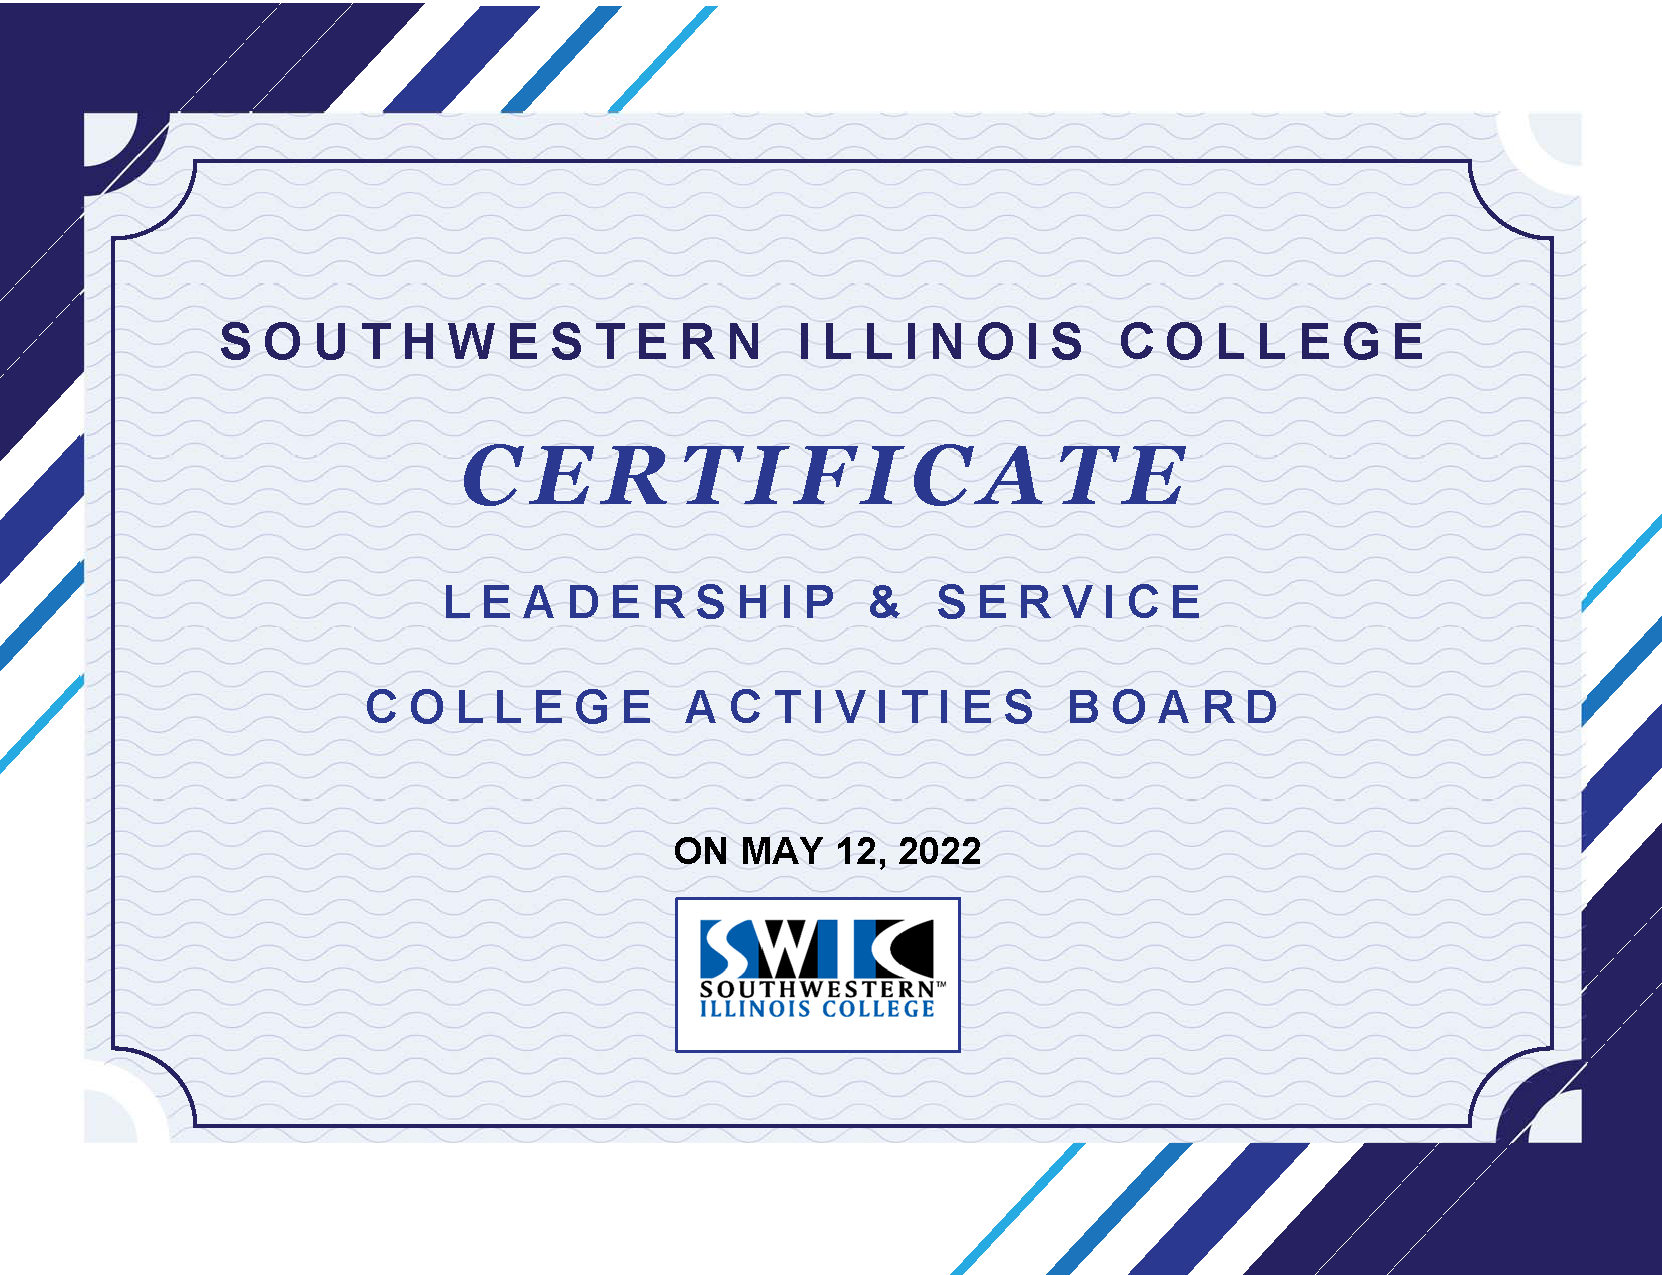 Southwestern Illinois College Certificate Leadership & Service College Activities Board